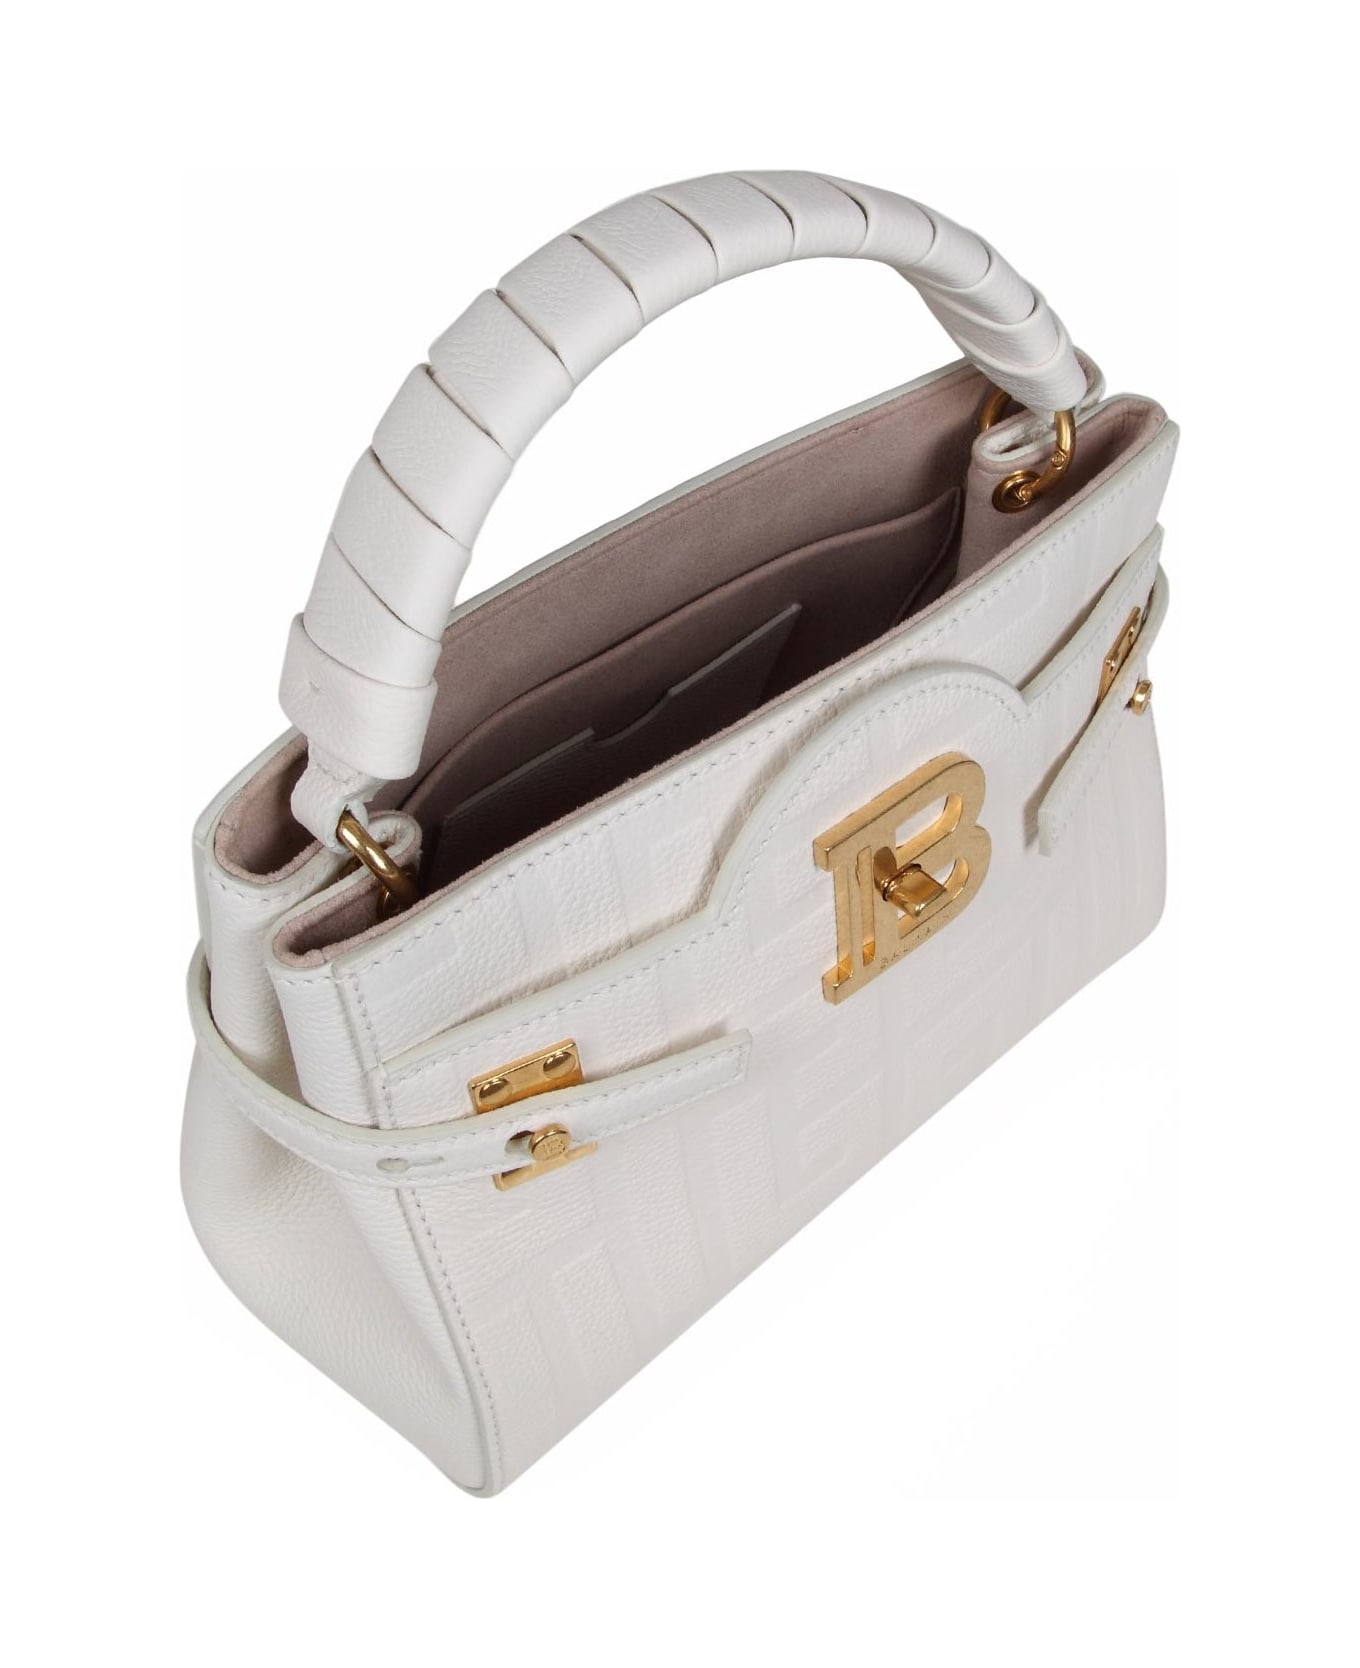 Balmain Bbuzz Handbag In Monogram Leather - WHITE